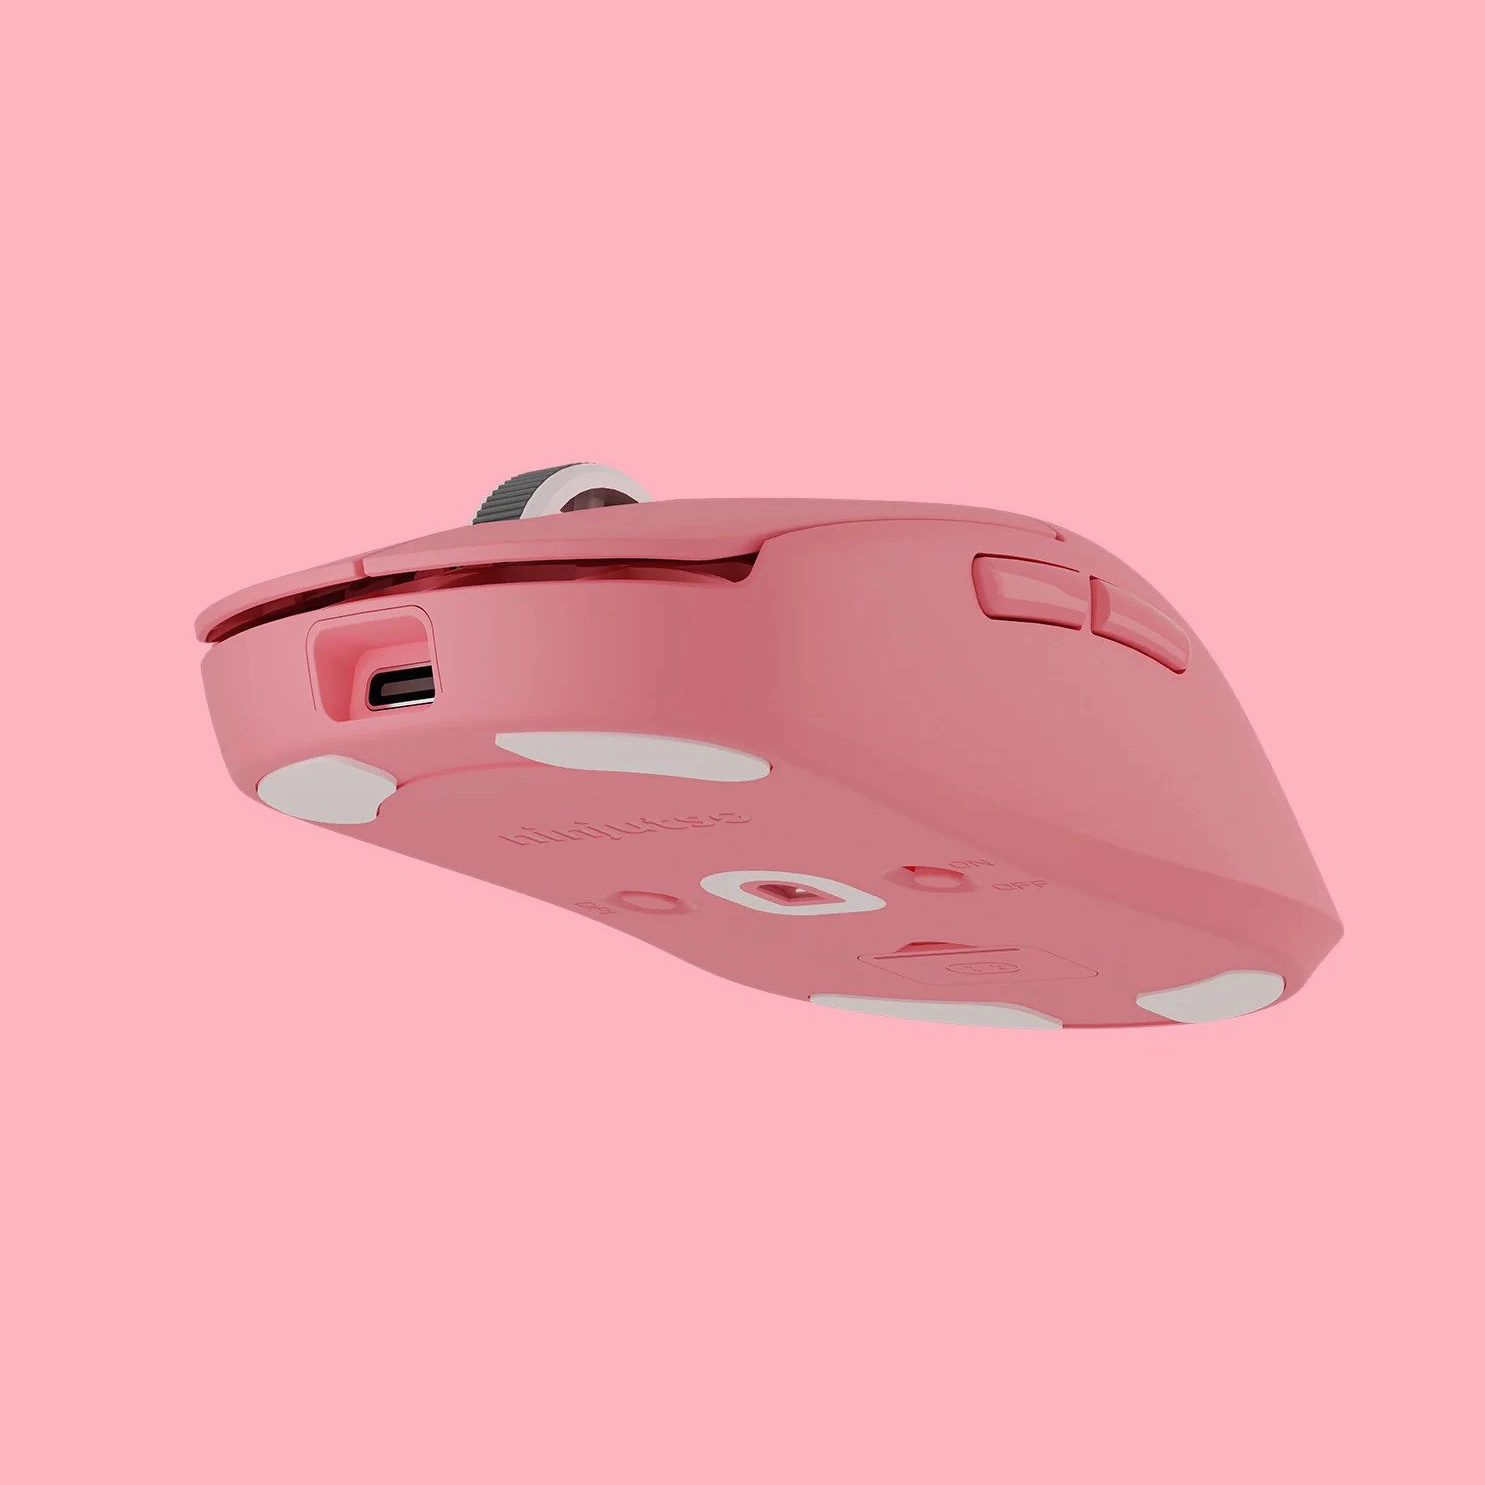 Ninjutso Sora Wireless Gaming Mouse - Pink Limited Edition 